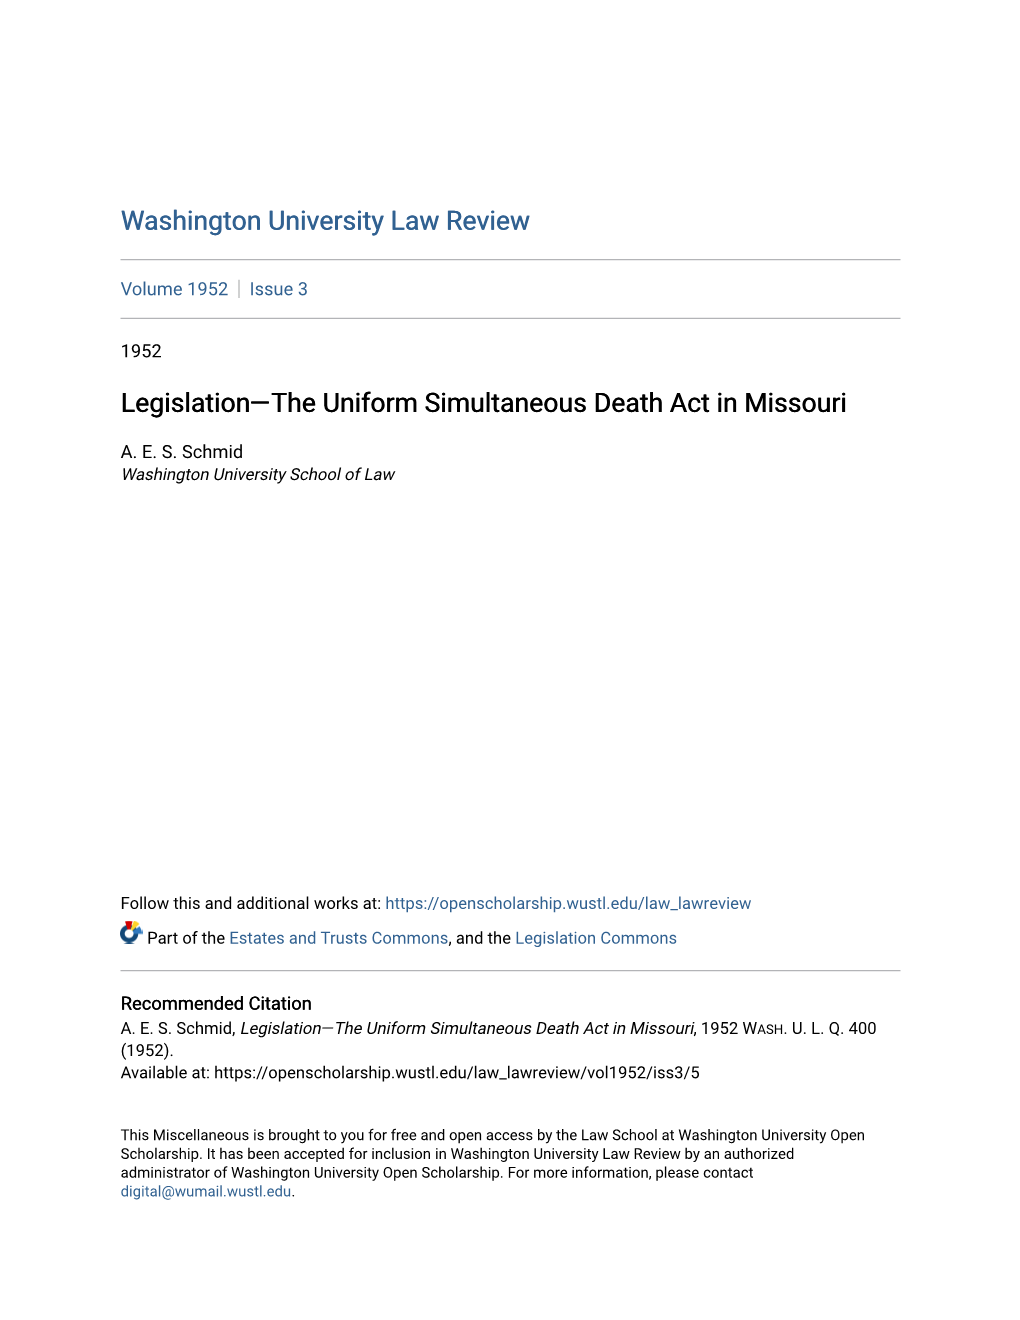 Legislationâ•Flthe Uniform Simultaneous Death Act in Missouri